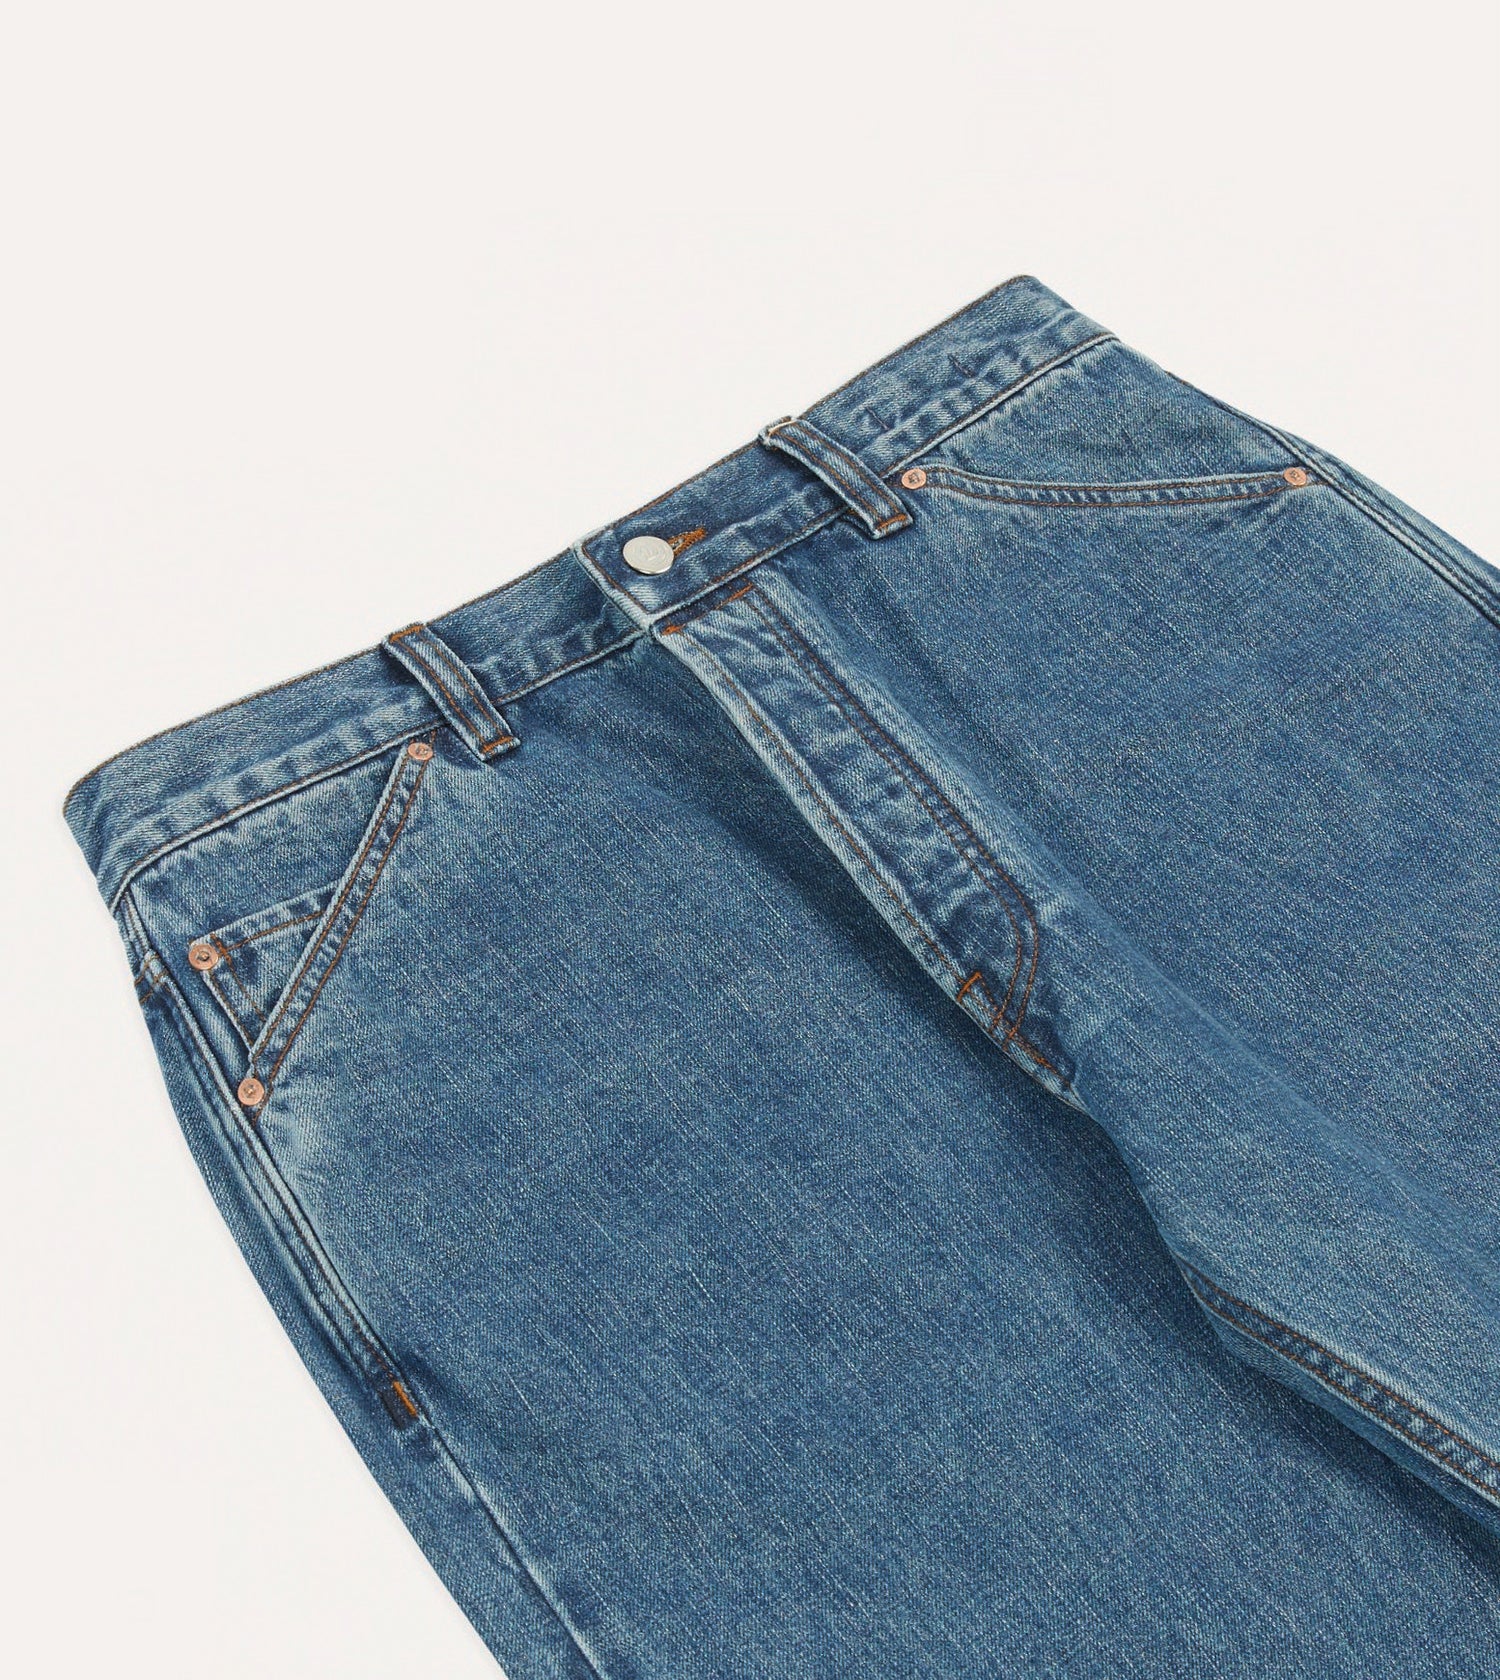 Bleach Wash 14.2oz Japanese Selvedge Denim Five-Pocket Jeans